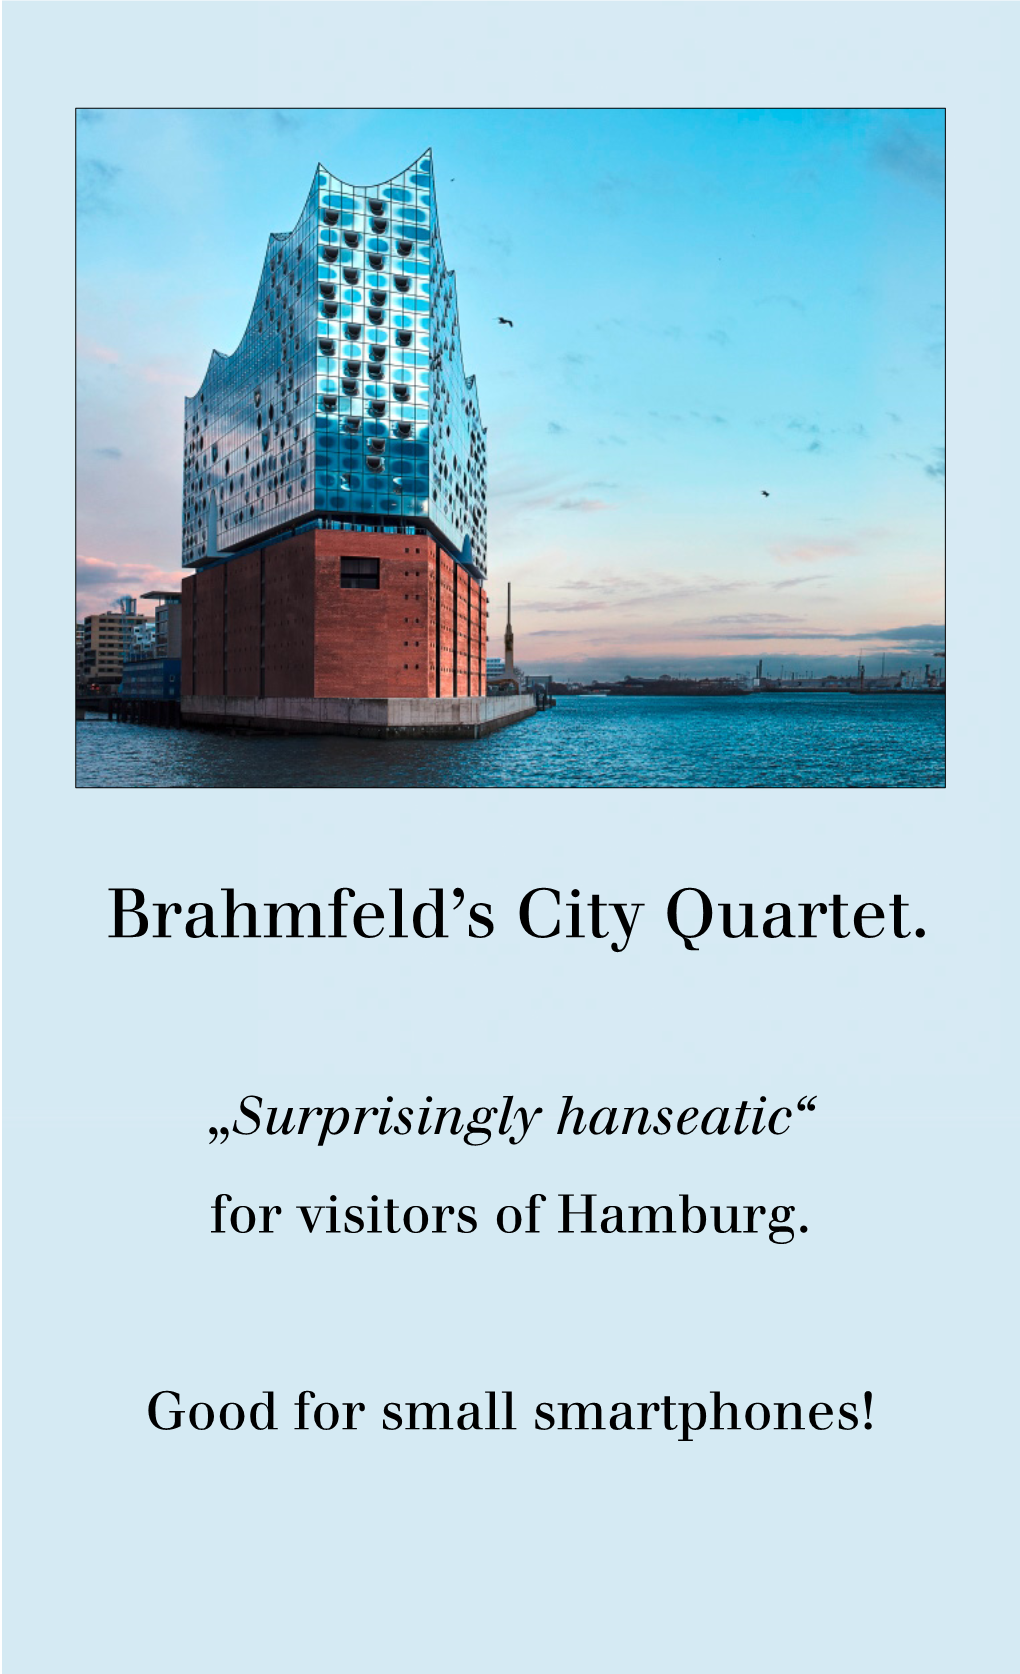 Brahmfeld's City Quartet